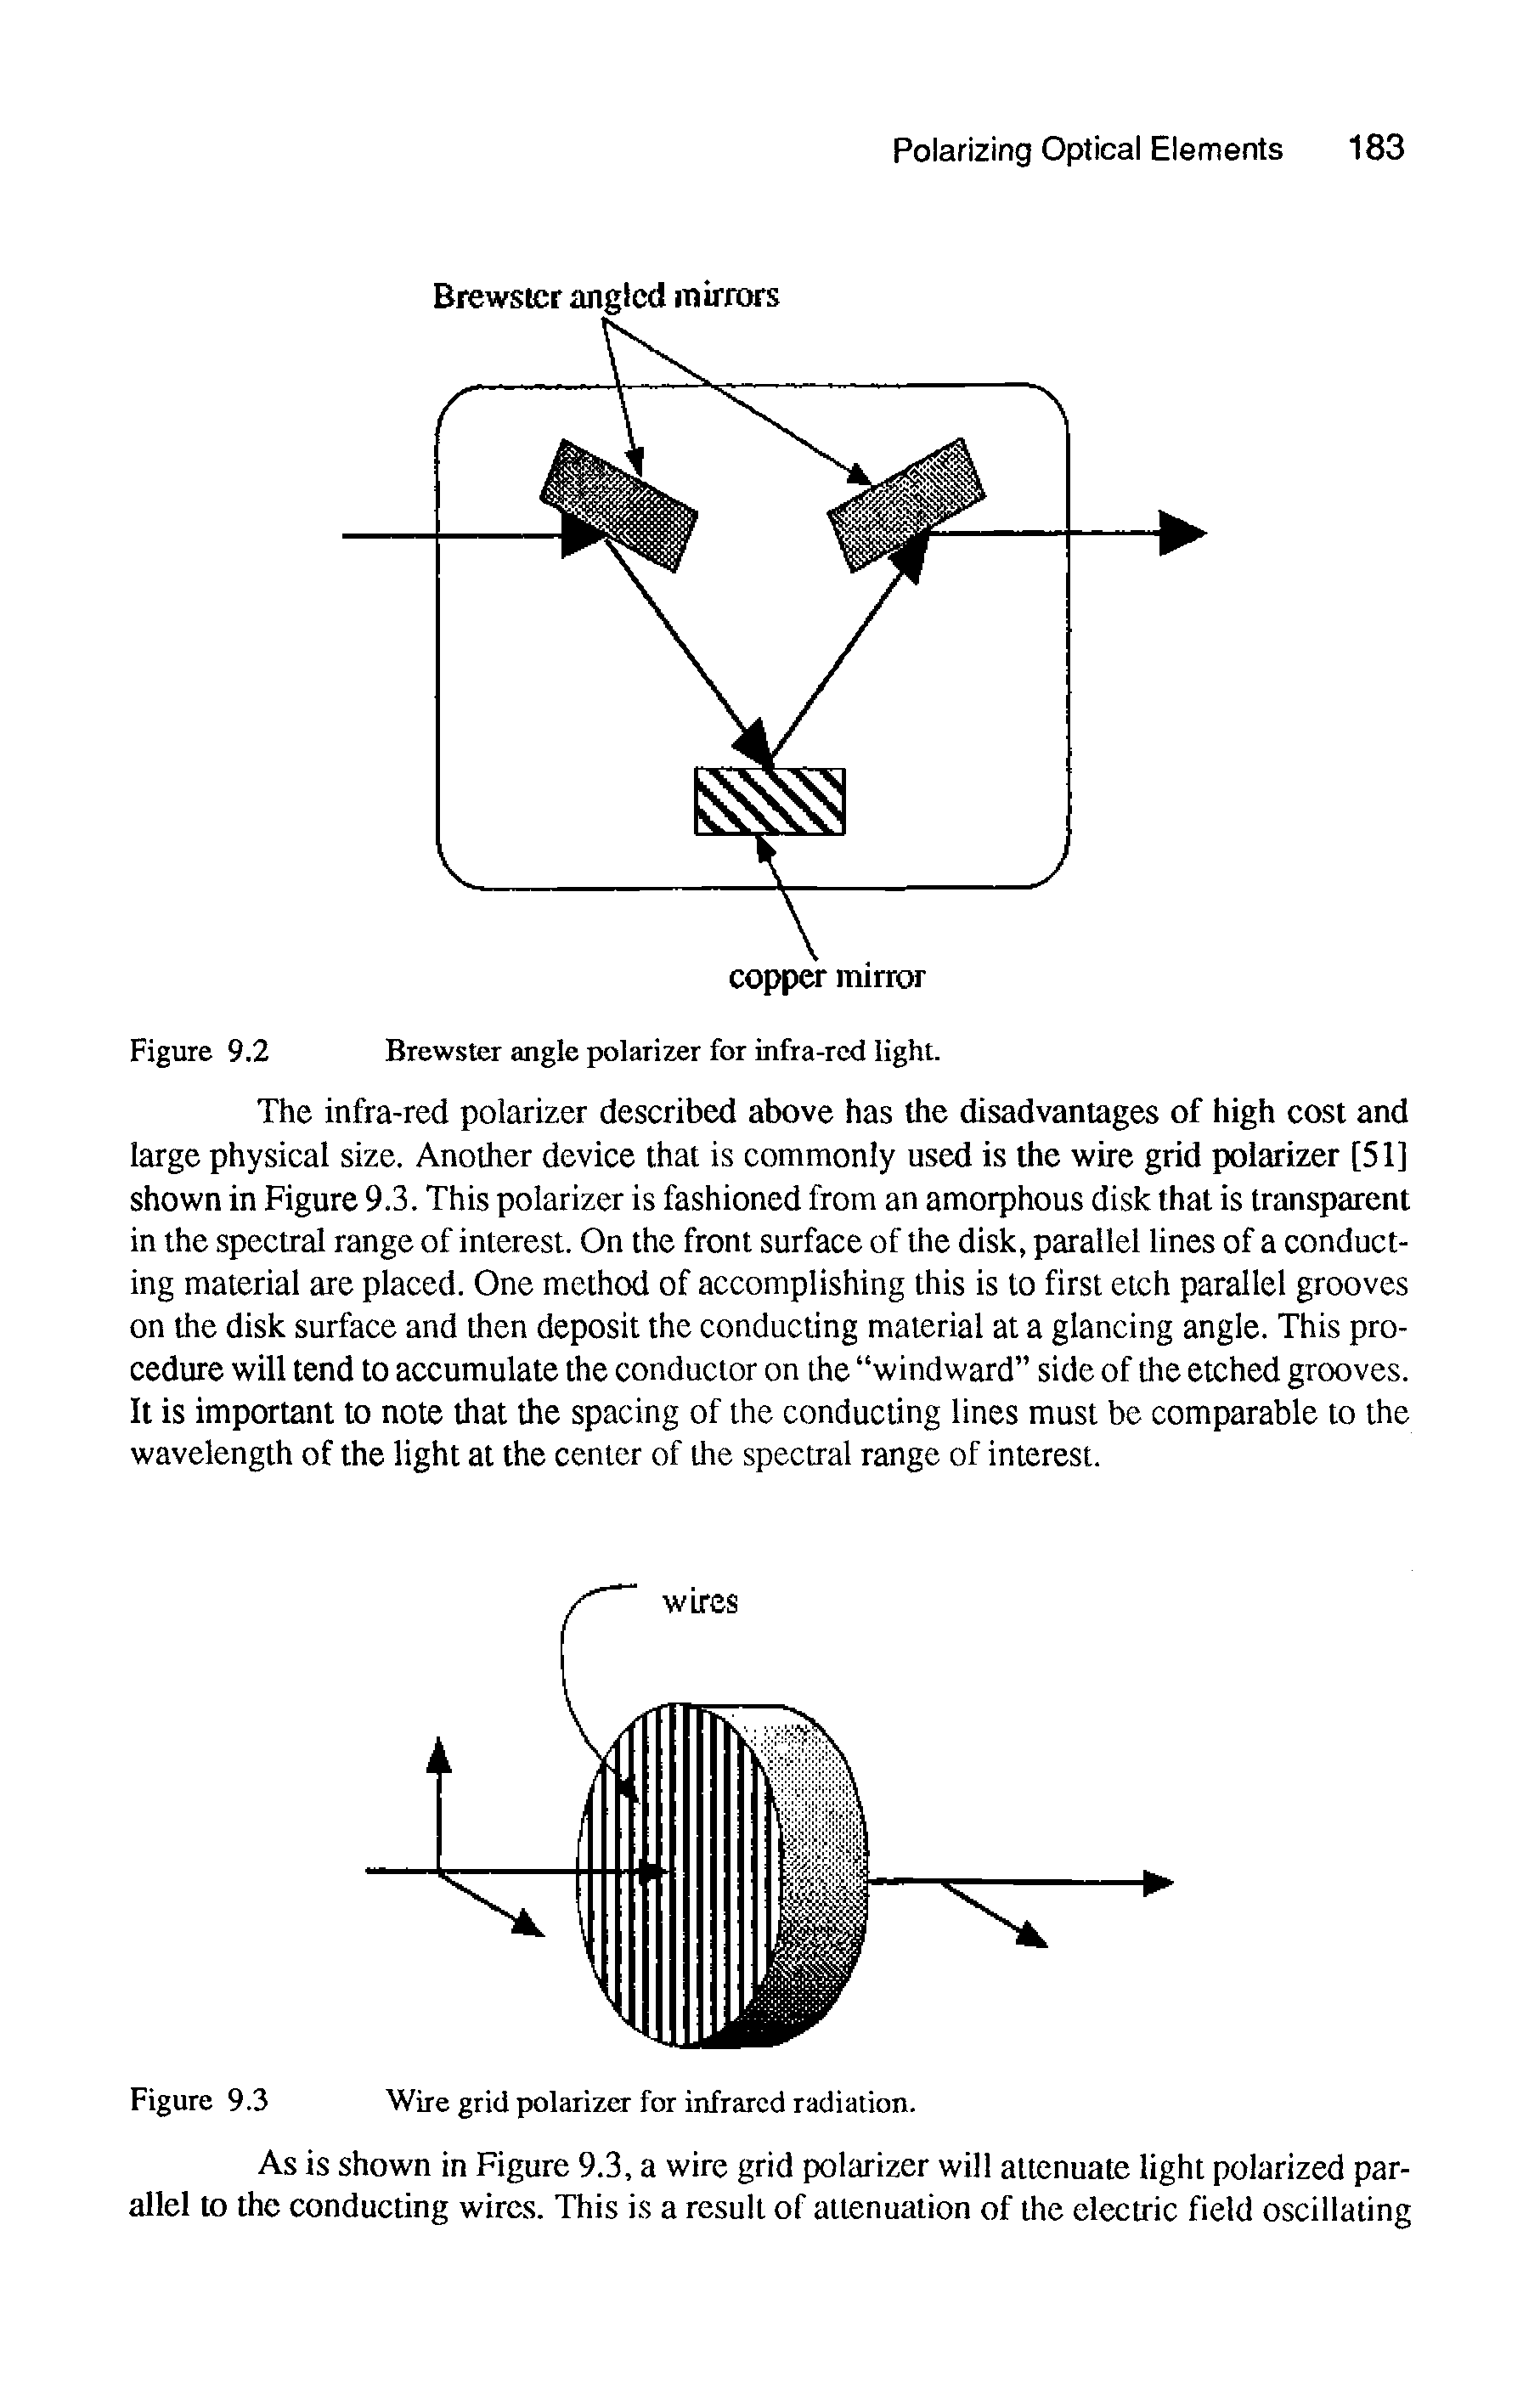 Figure 9.2 Brewster angle polarizer for infra-red light.